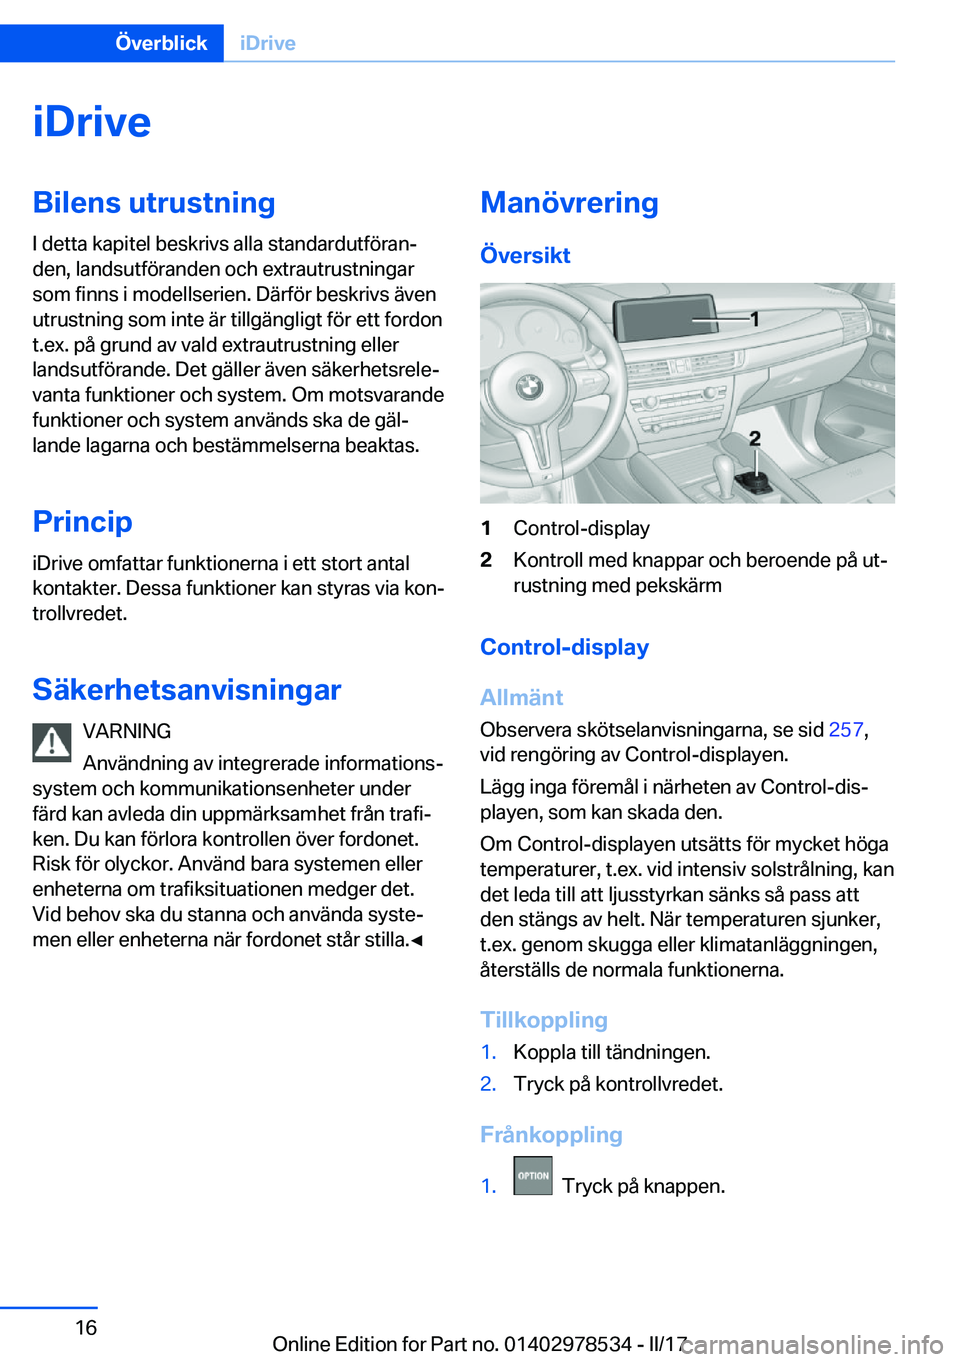 BMW X6 M 2017  InstruktionsbÖcker (in Swedish) �i�D�r�i�v�e�B�i�l�e�n�s��u�t�r�u�s�t�n�i�n�g
�I� �d�e�t�t�a� �k�a�p�i�t�e�l� �b�e�s�k�r�i�v�s� �a�l�l�a� �s�t�a�n�d�a�r�d�u�t�f�ö�r�a�nj �d�e�n�,� �l�a�n�d�s�u�t�f�ö�r�a�n�d�e�n� �o�c�h� �e�x�t�r